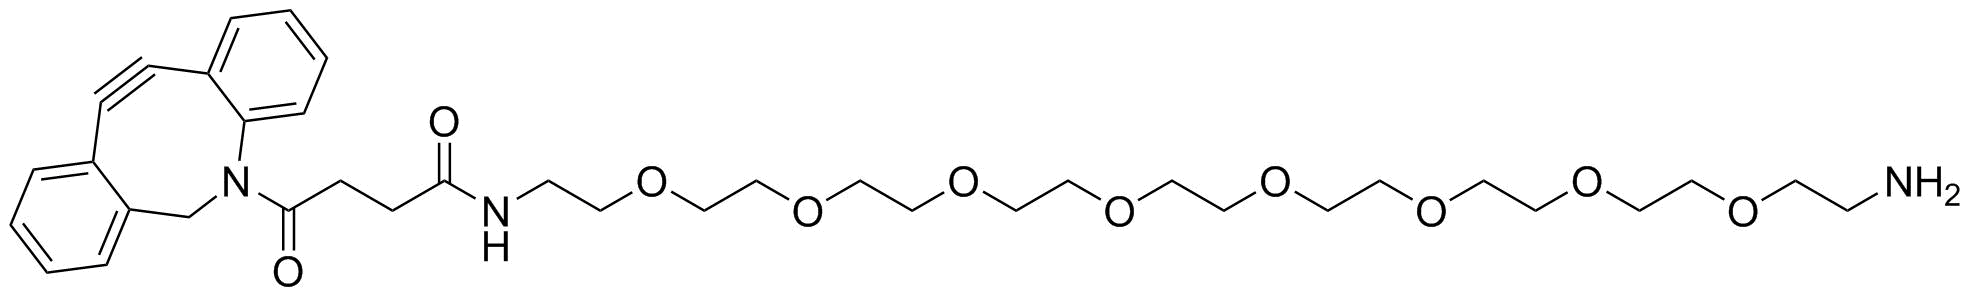 DBCO-PEG8-amine TFA salt